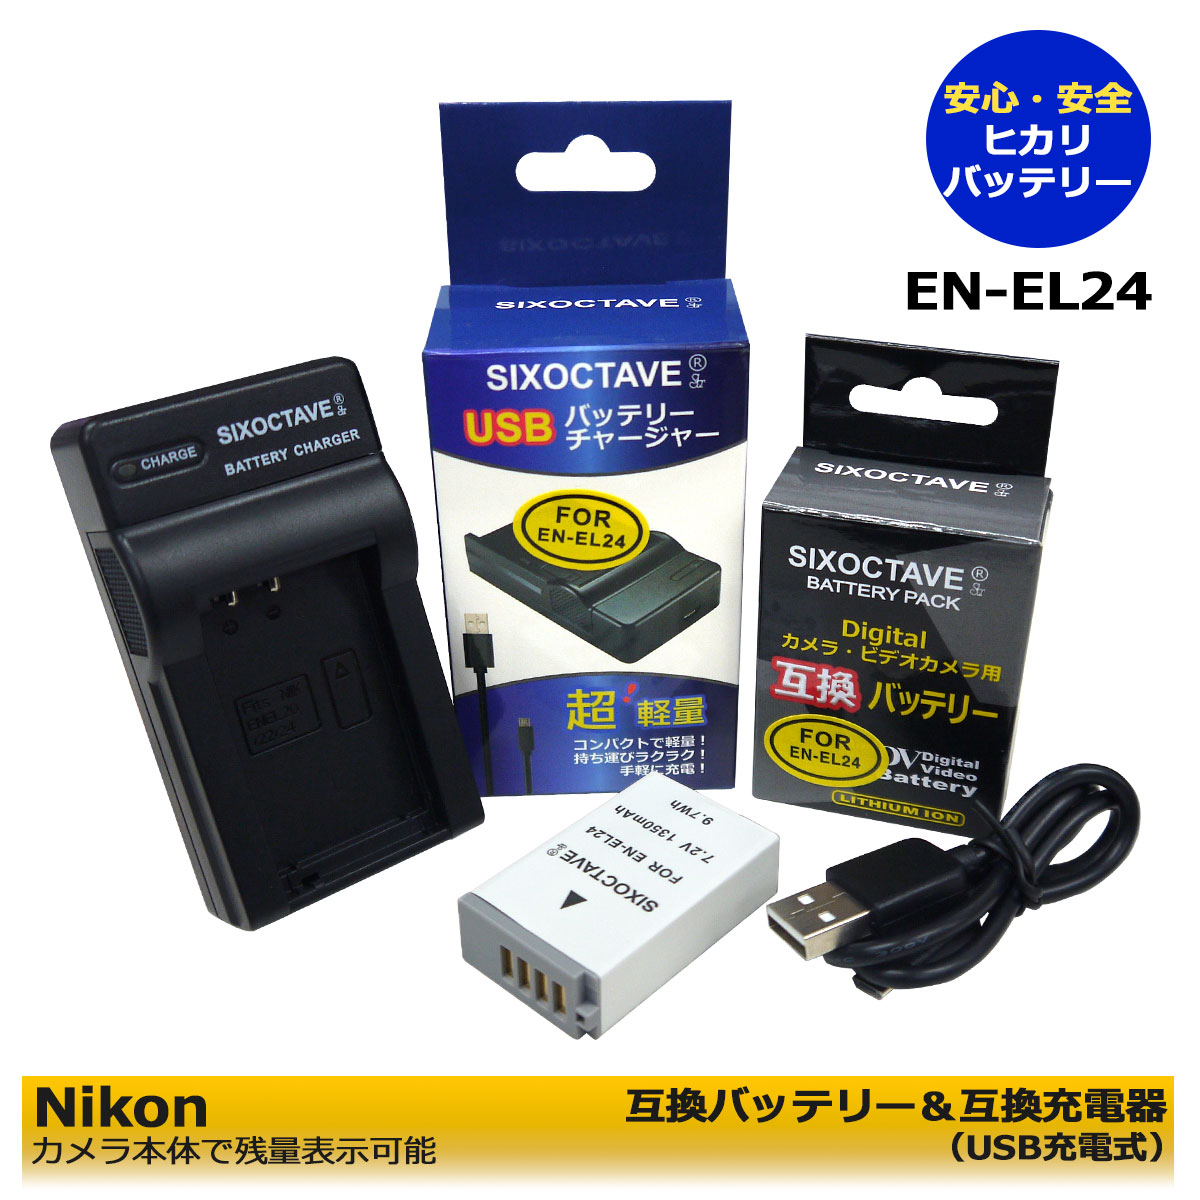 EN-EL24 【あす楽対応】ニコン Nikon 互換バッテ